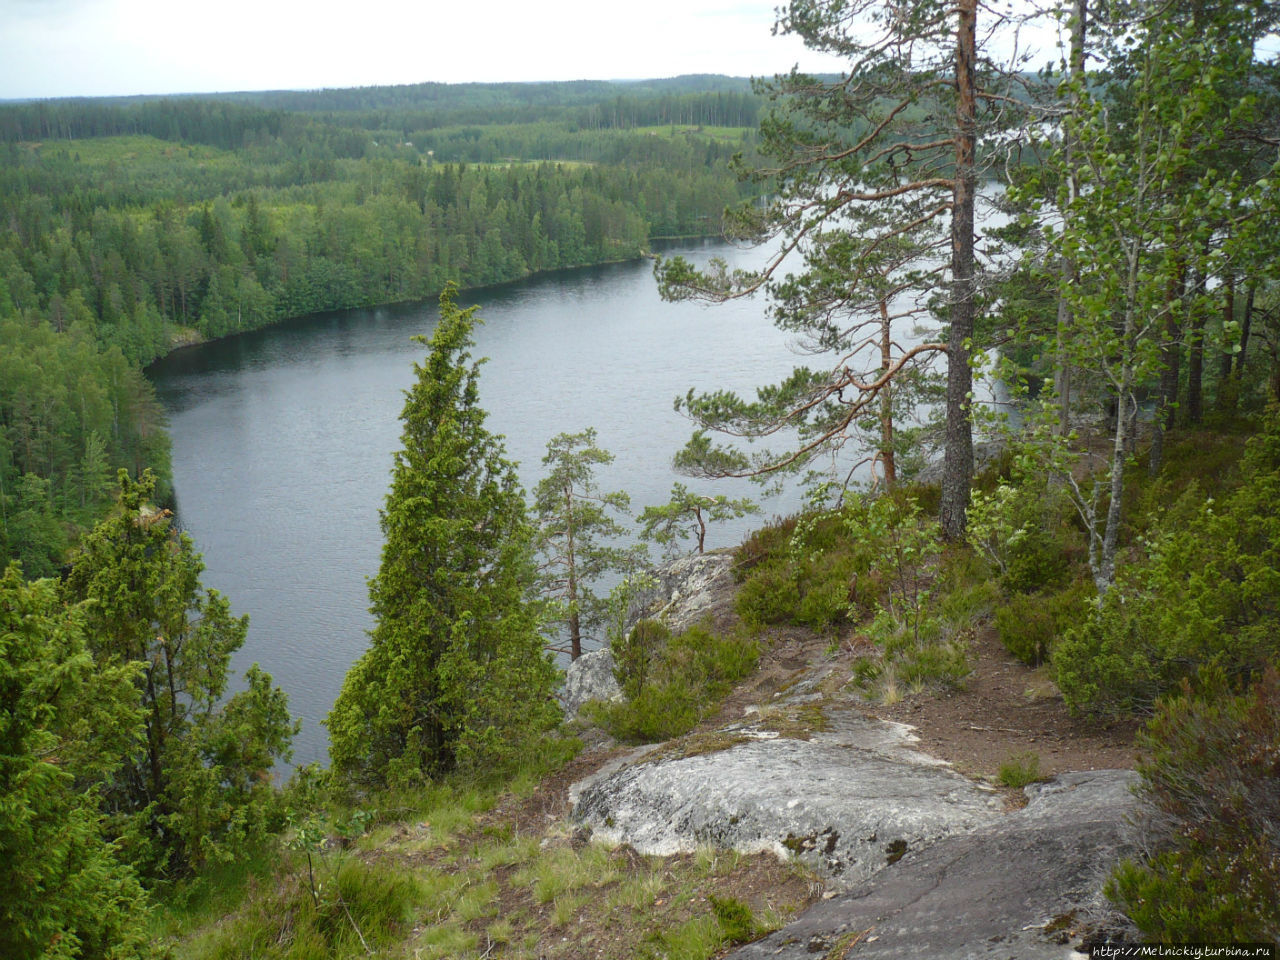 Гора Хауккавори Симпеле, Финляндия